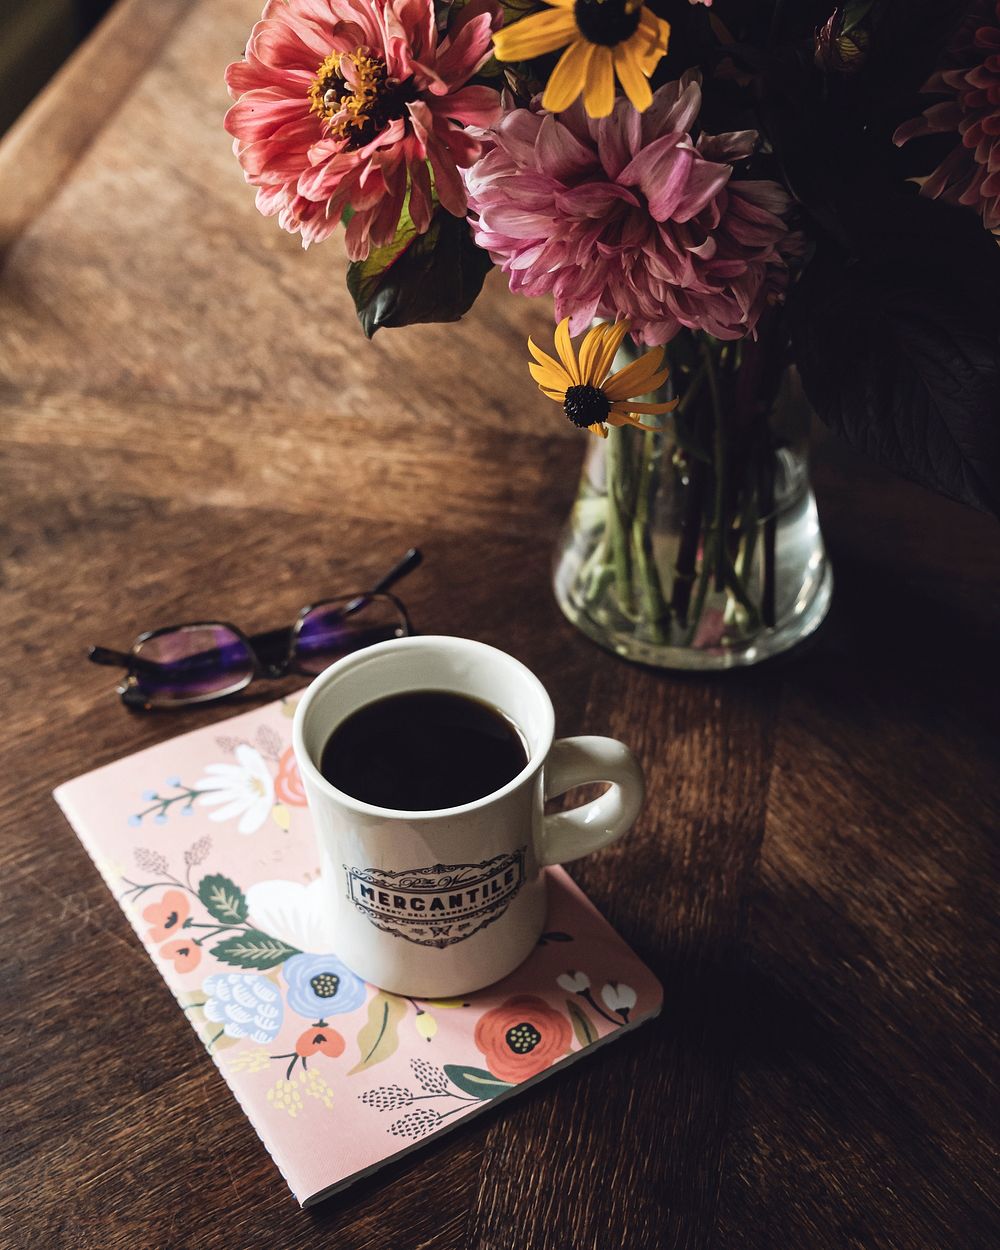 Free black coffee, flowers, vase on wooden table photo, public domain beverage CC0 image.